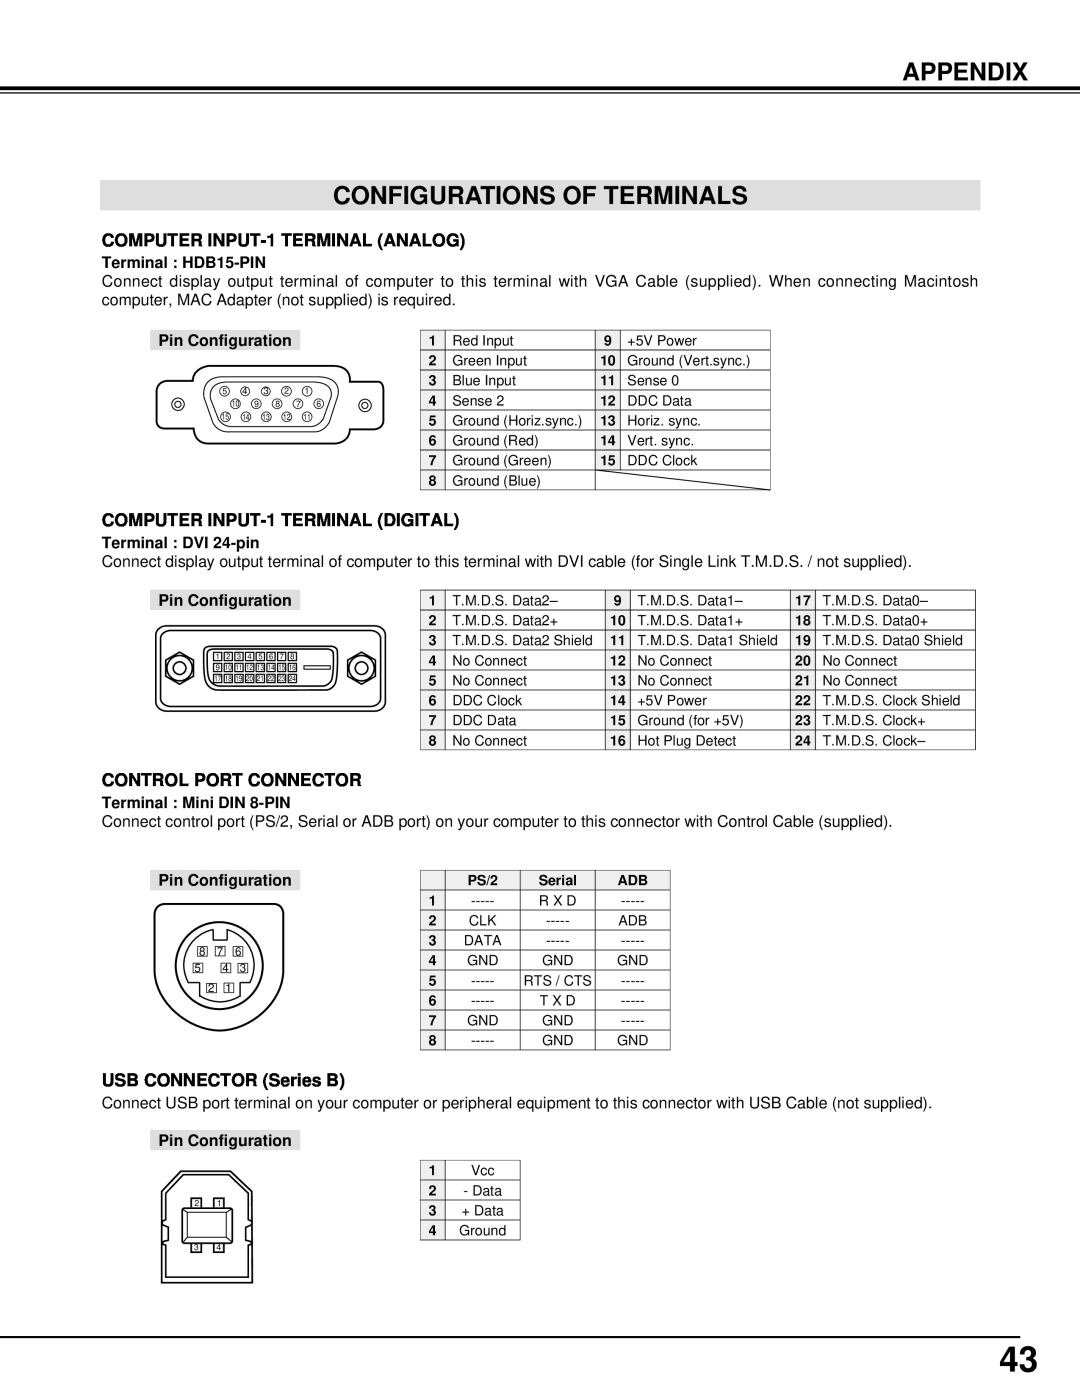 Eiki LC-X1000 instruction manual Terminal HDB15-PIN, Pin Configuration, Terminal DVI 24-pin, Terminal Mini DIN 8-PIN 